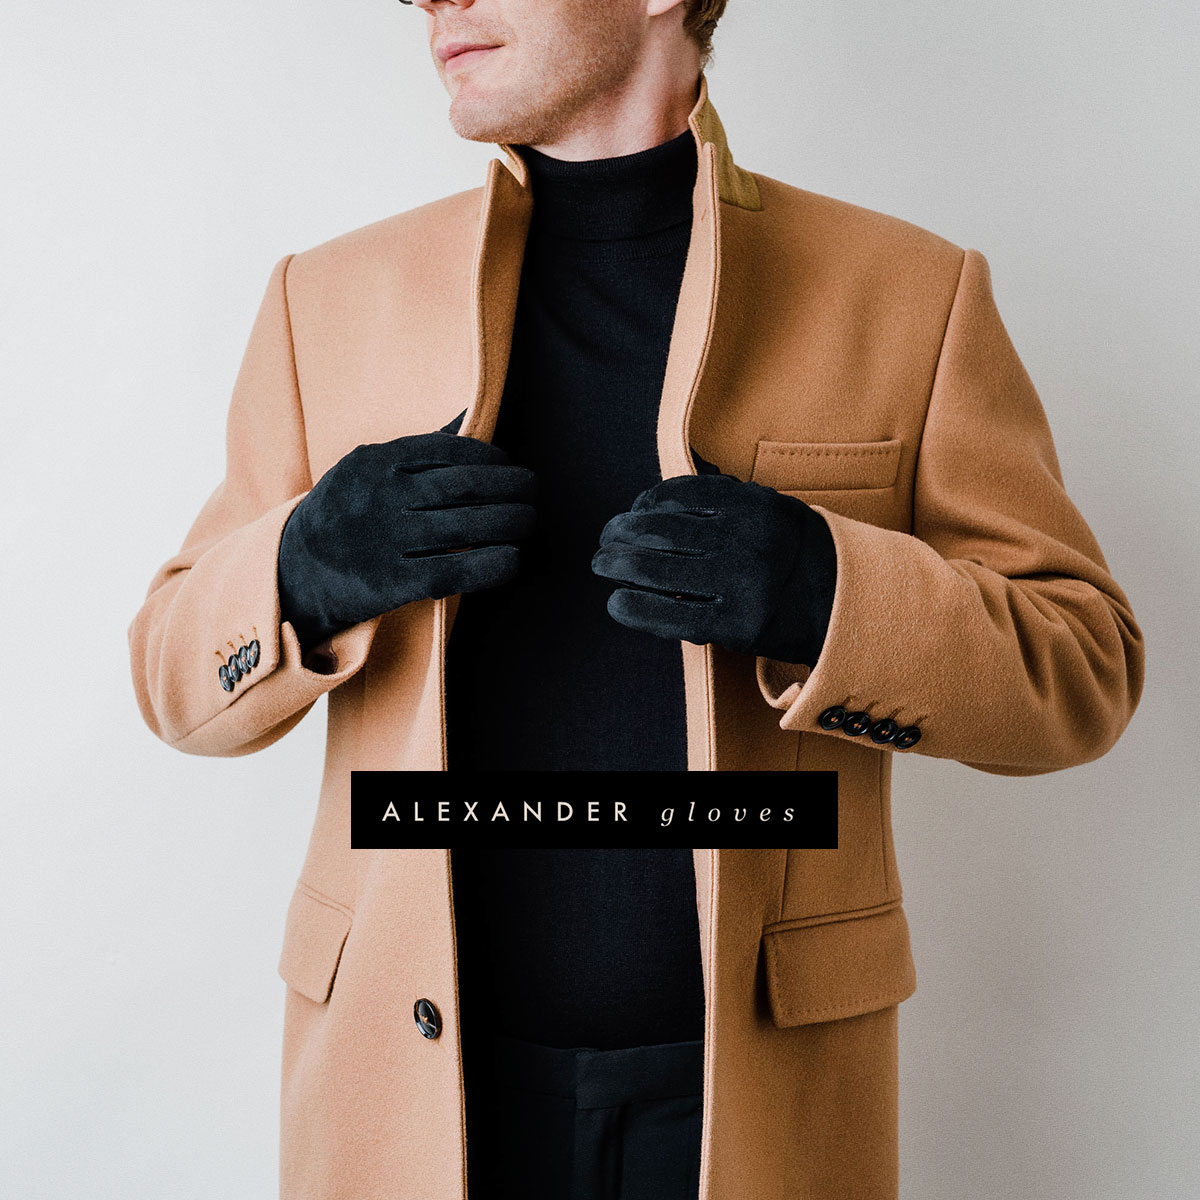 amofw-alexander-gloves-cover